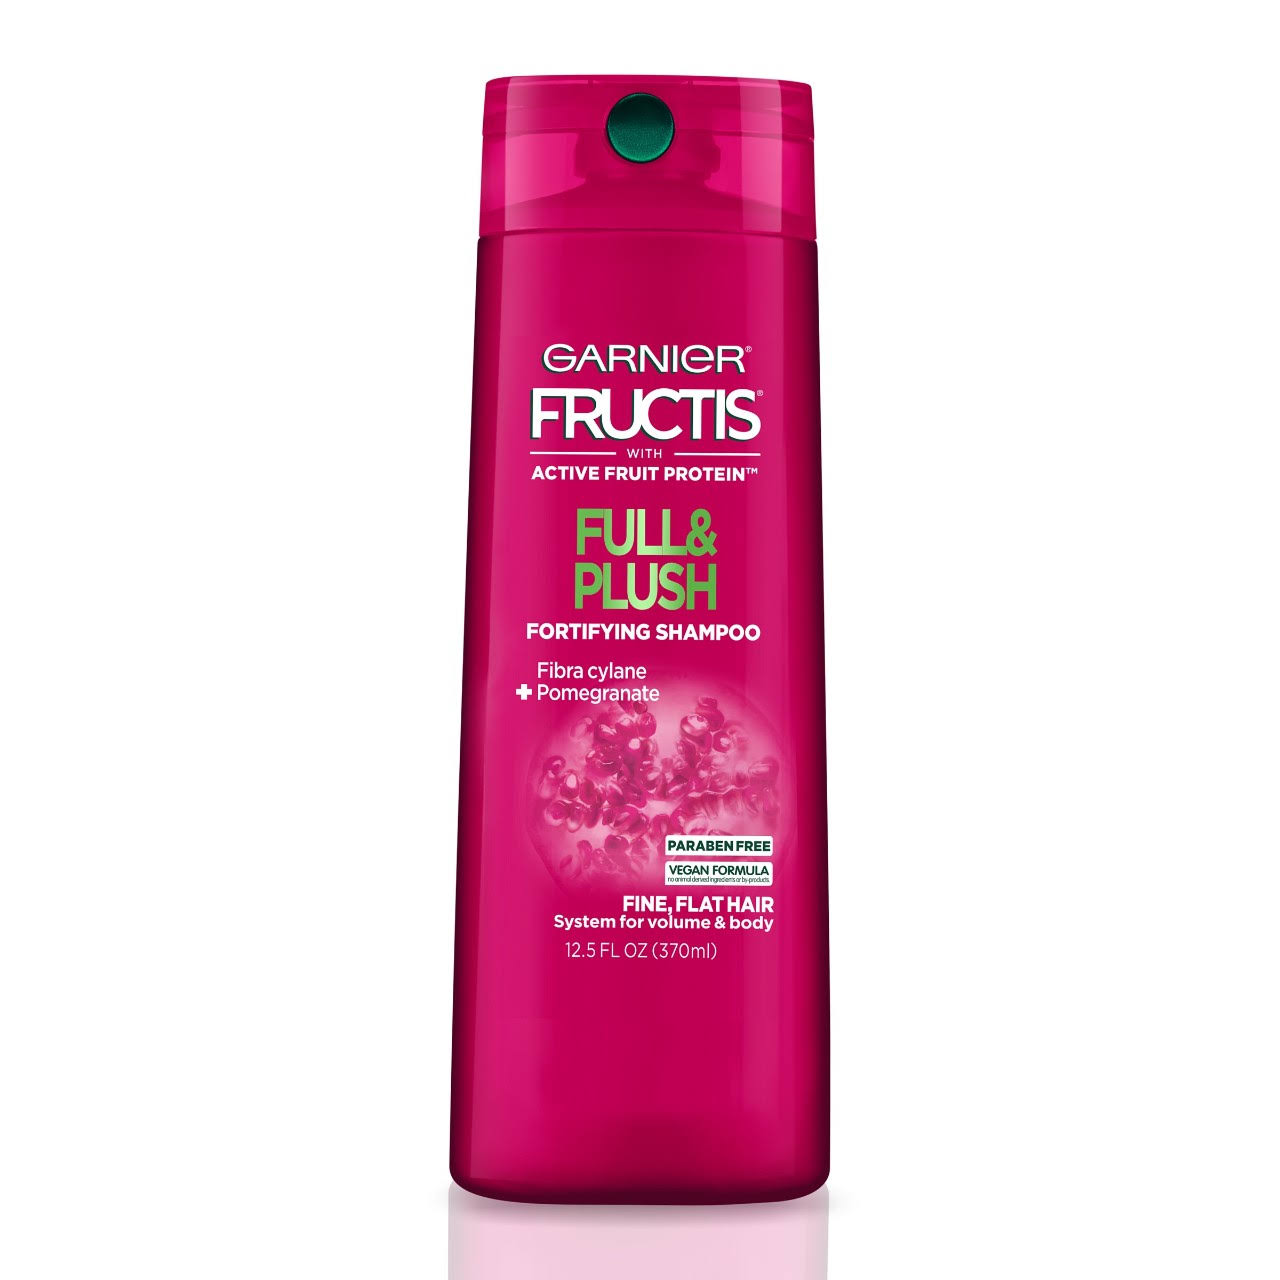 Garnier Hair Care Fructis Full and Plush Shampoo - 370ml